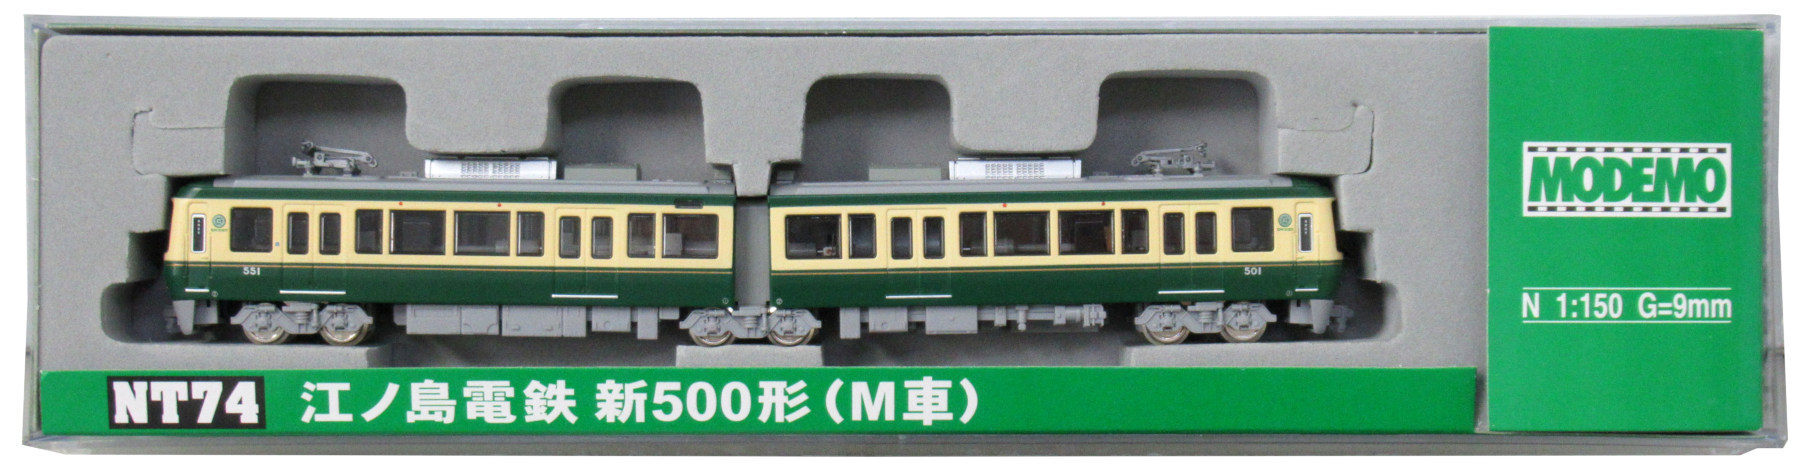 MODEMO NT74 江ノ島電鉄新500形(M車) - 鉄道模型